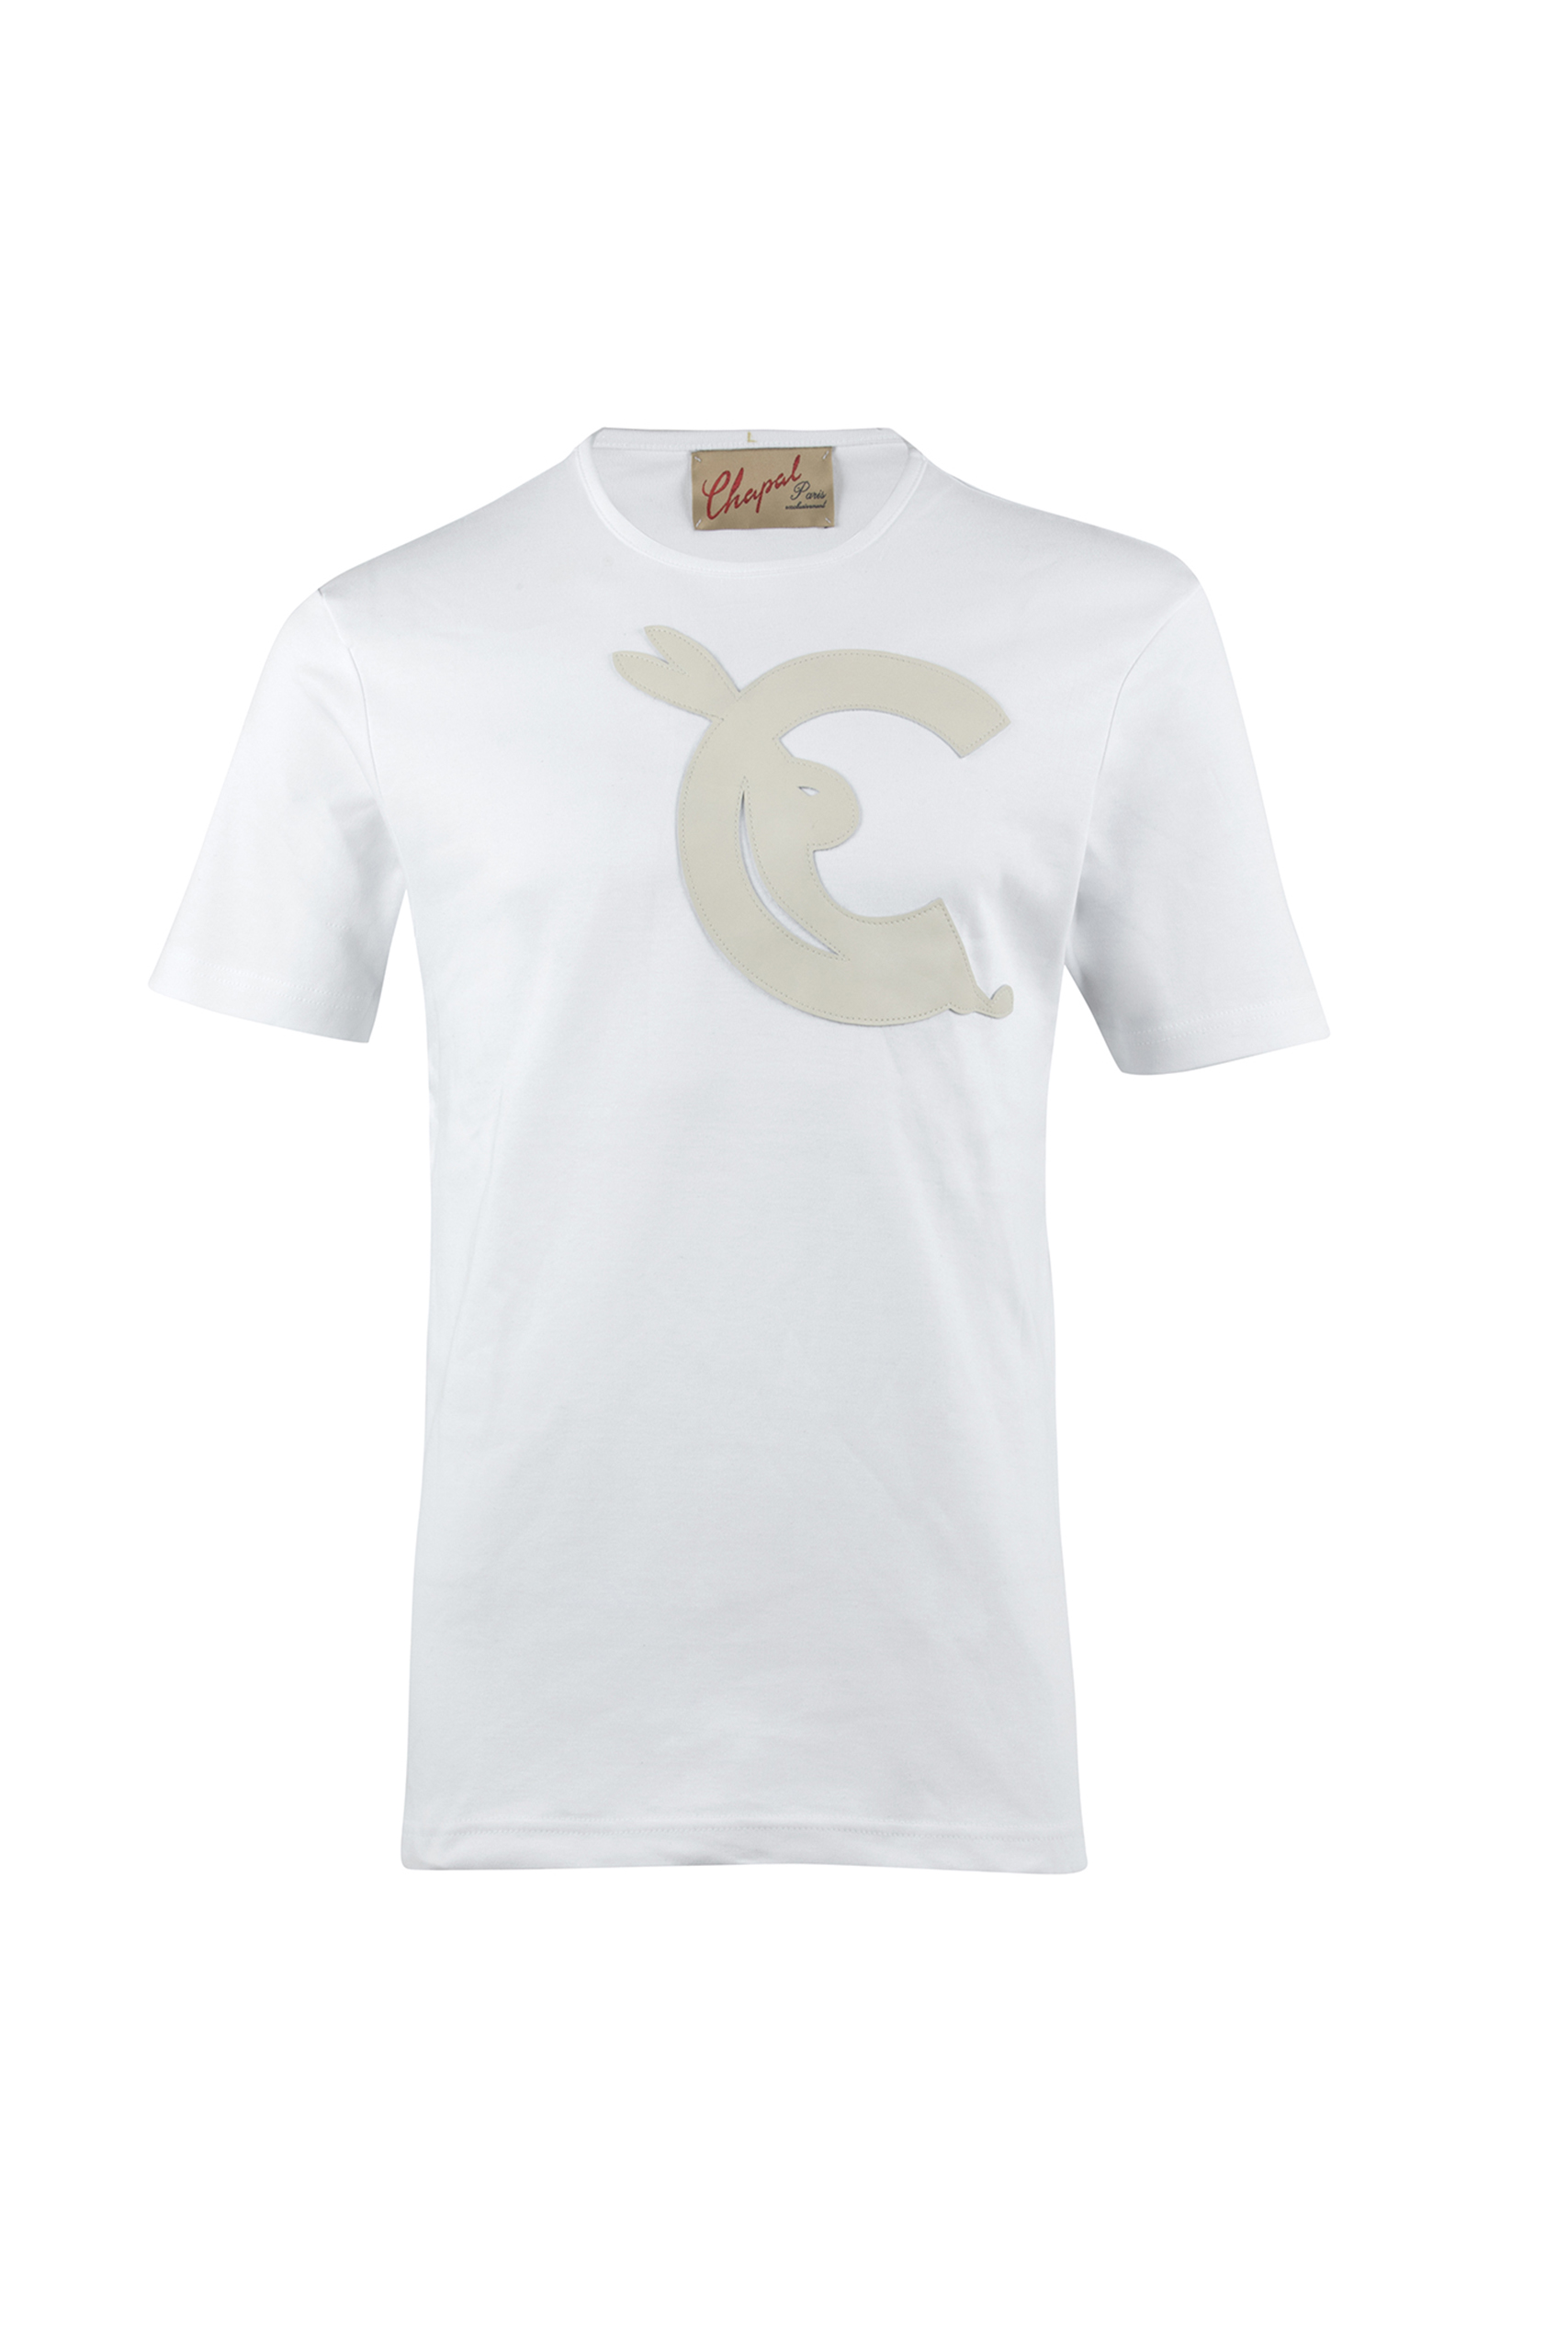 T-shirt Clair de Lune - Combed cotton jersey - White color - Home page